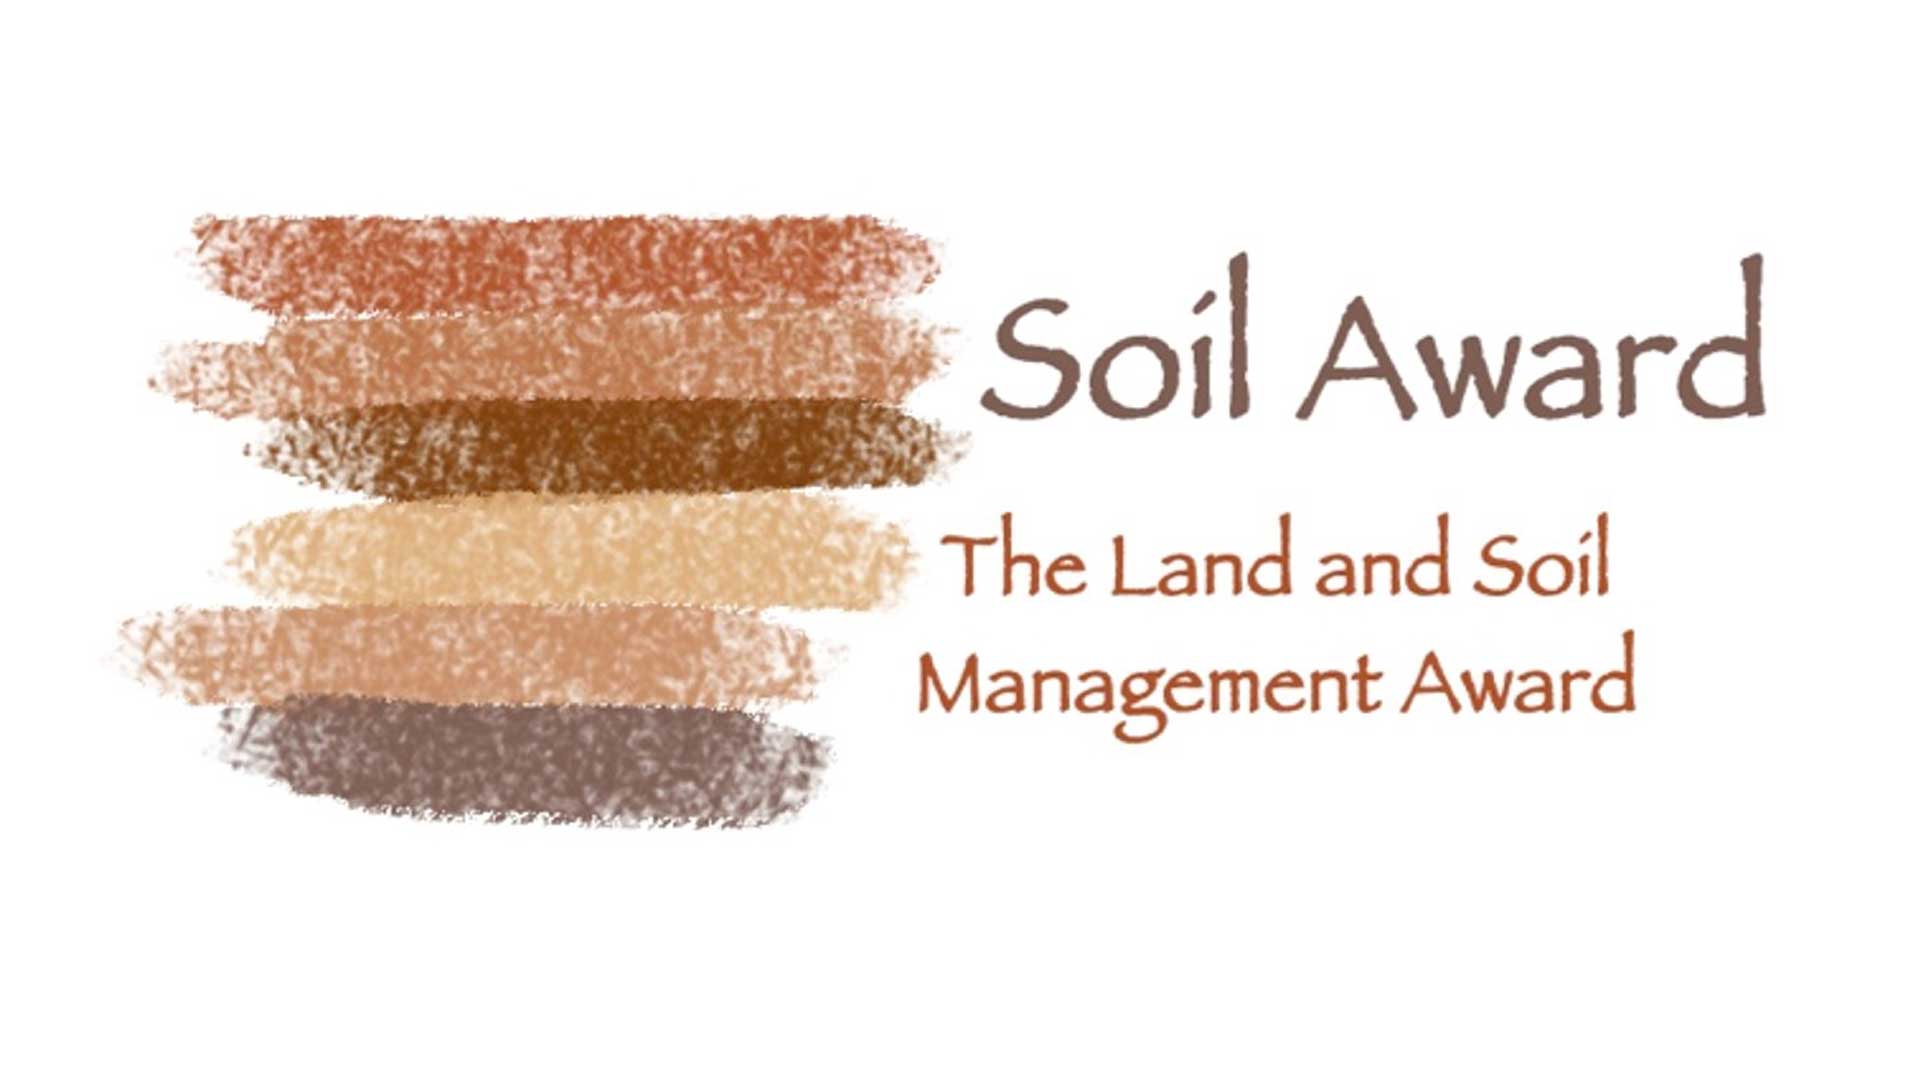 2022 ForumforAg | Land and Soil Management Award intro video iamge